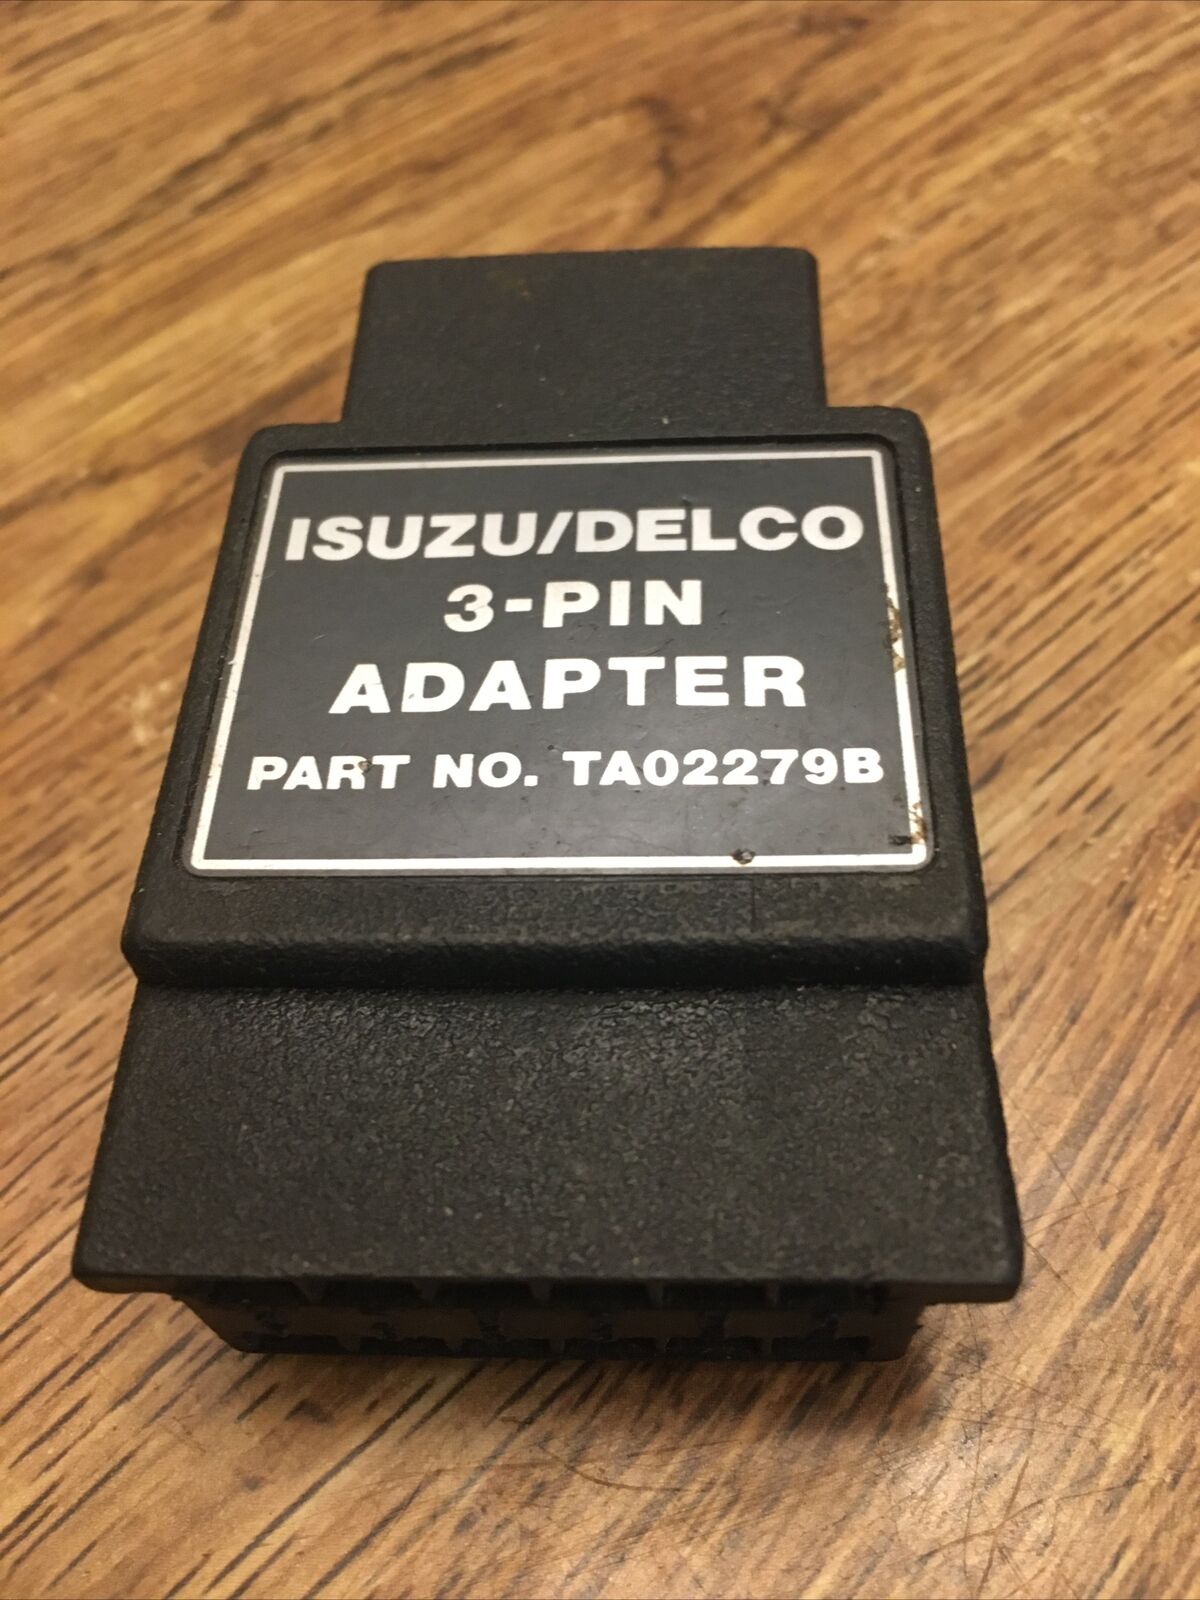 isuzu/delco 3-pin adapter gm